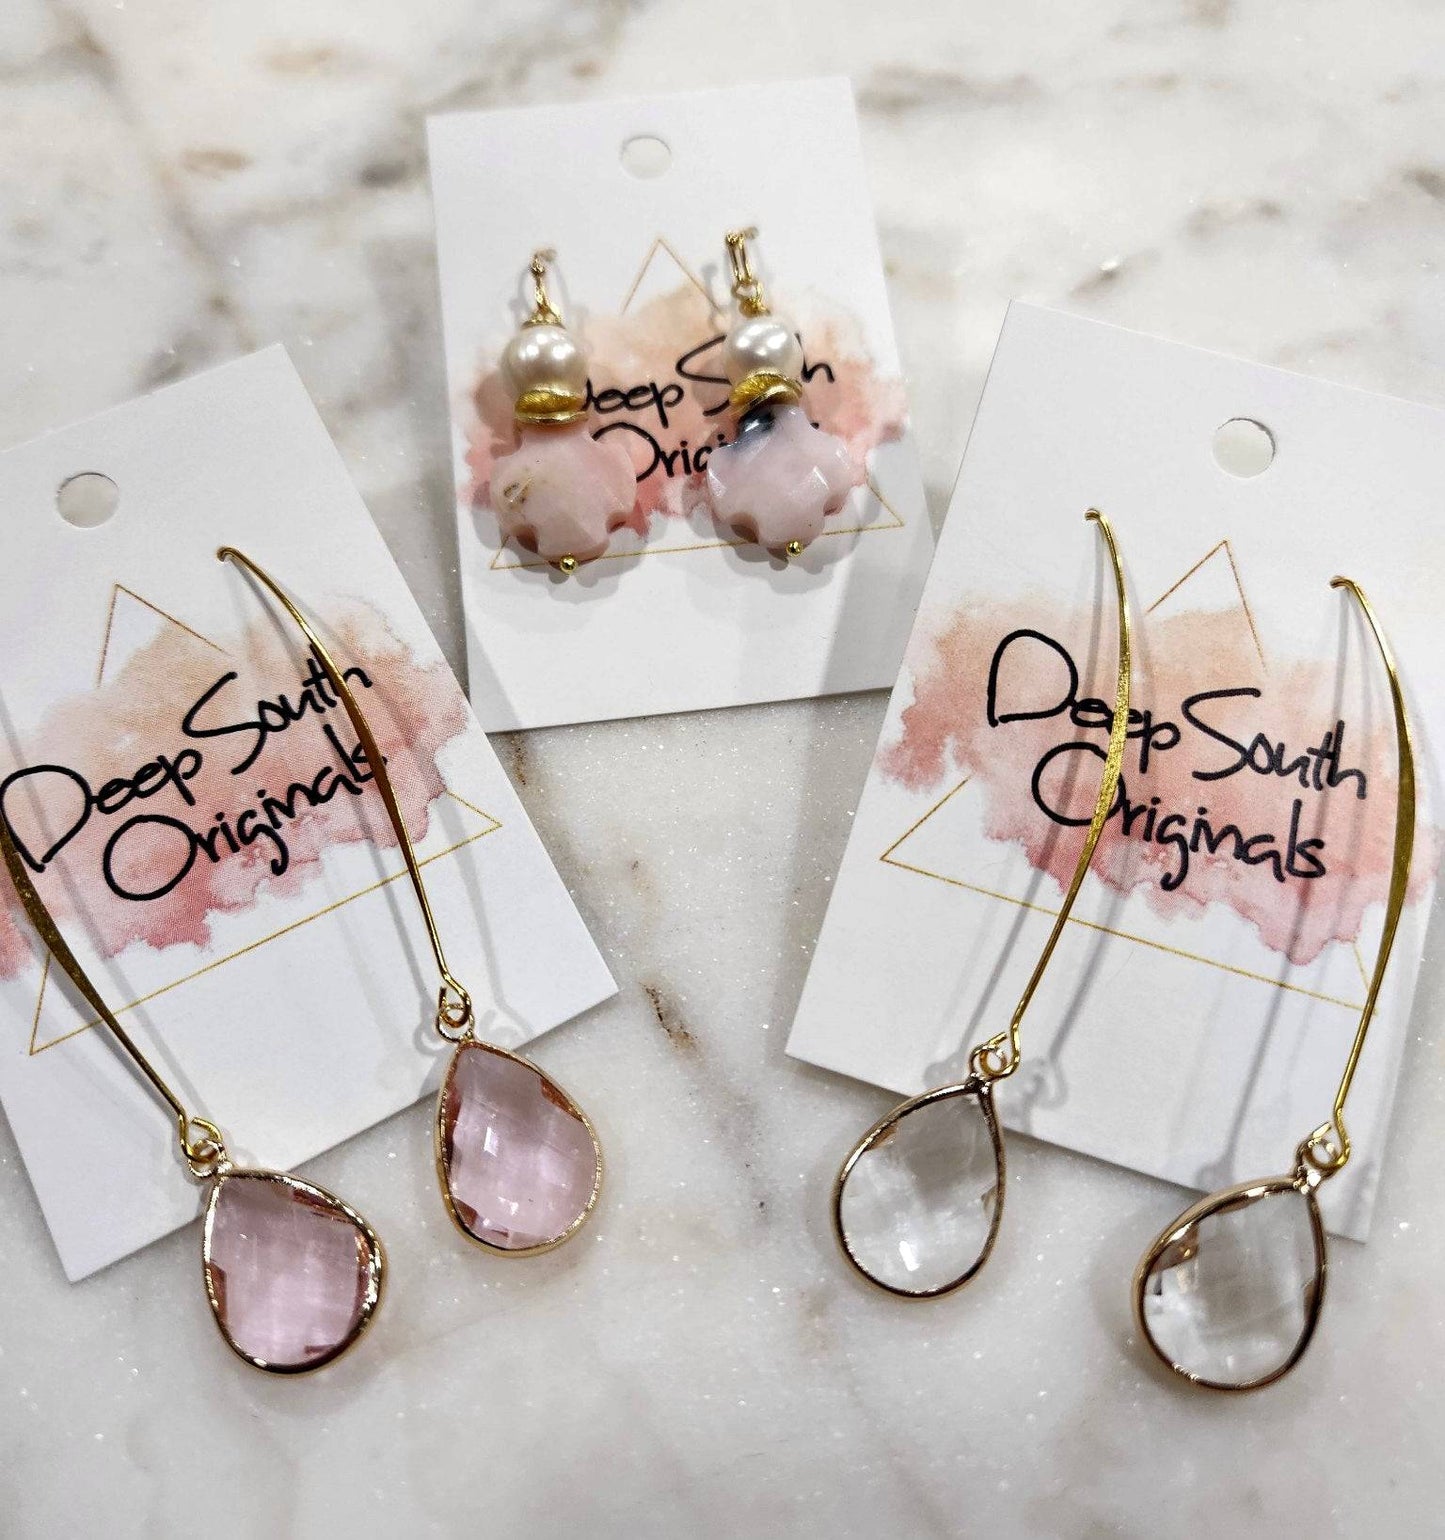 Rose Quartz and Freshwater Pearl earrings - Deep South Originals